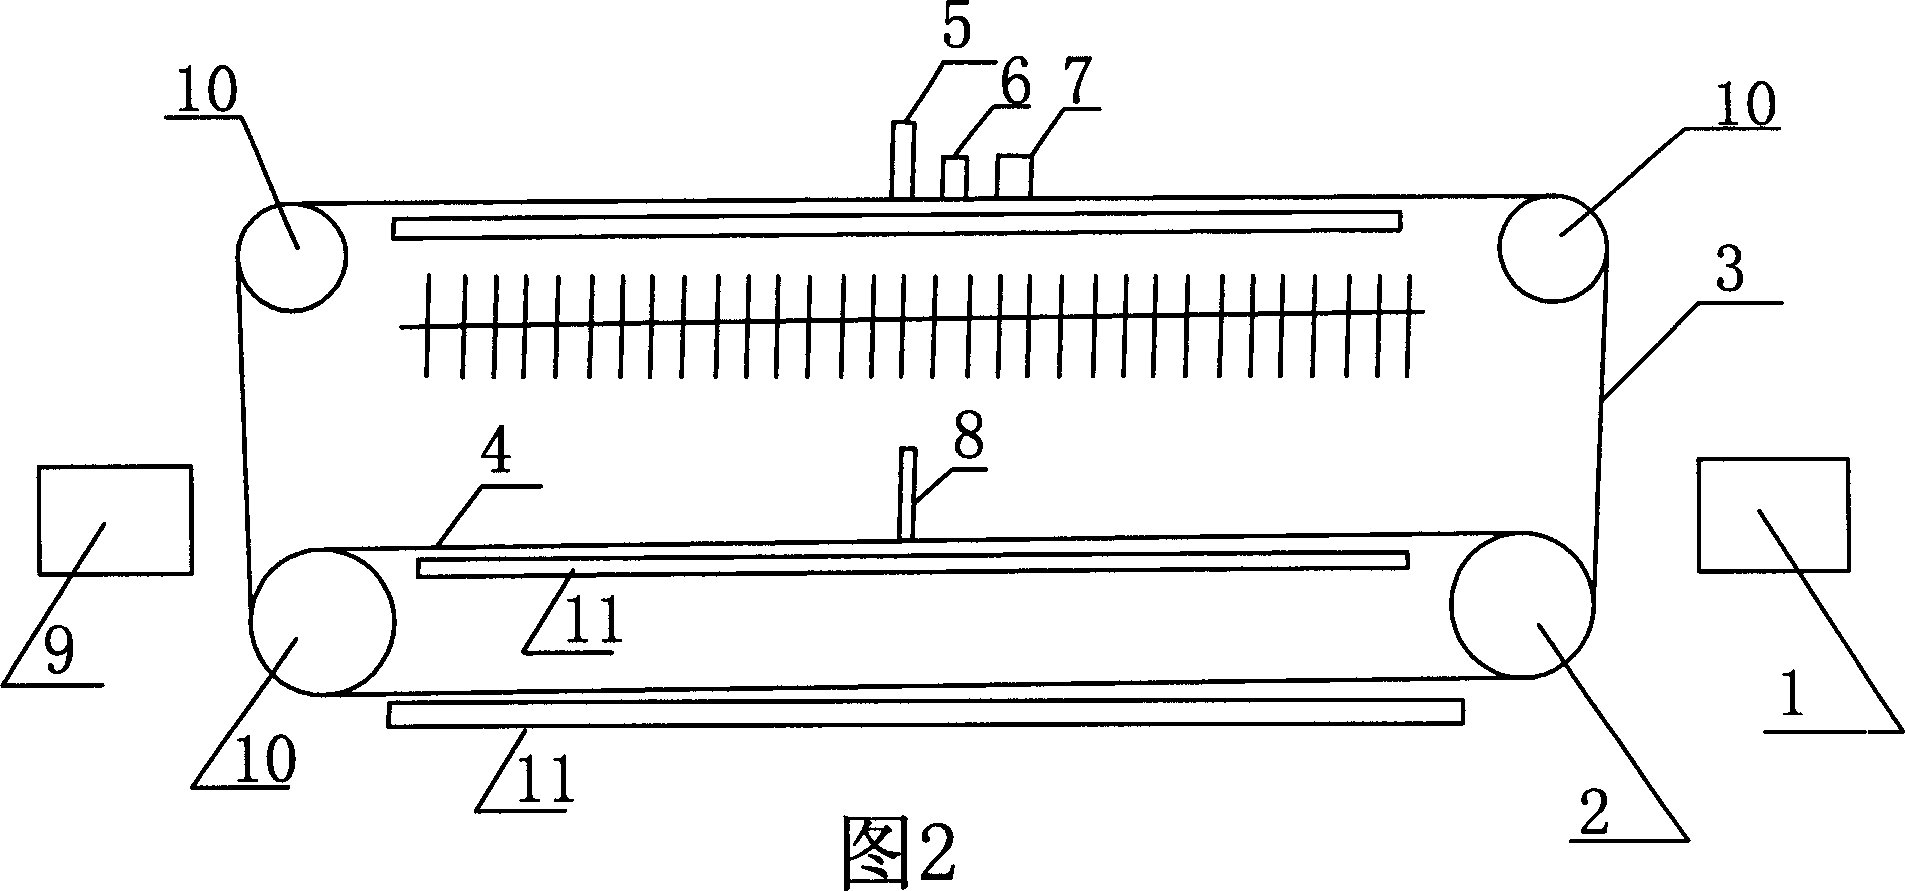 Unit for determining broken end position of weaving machine